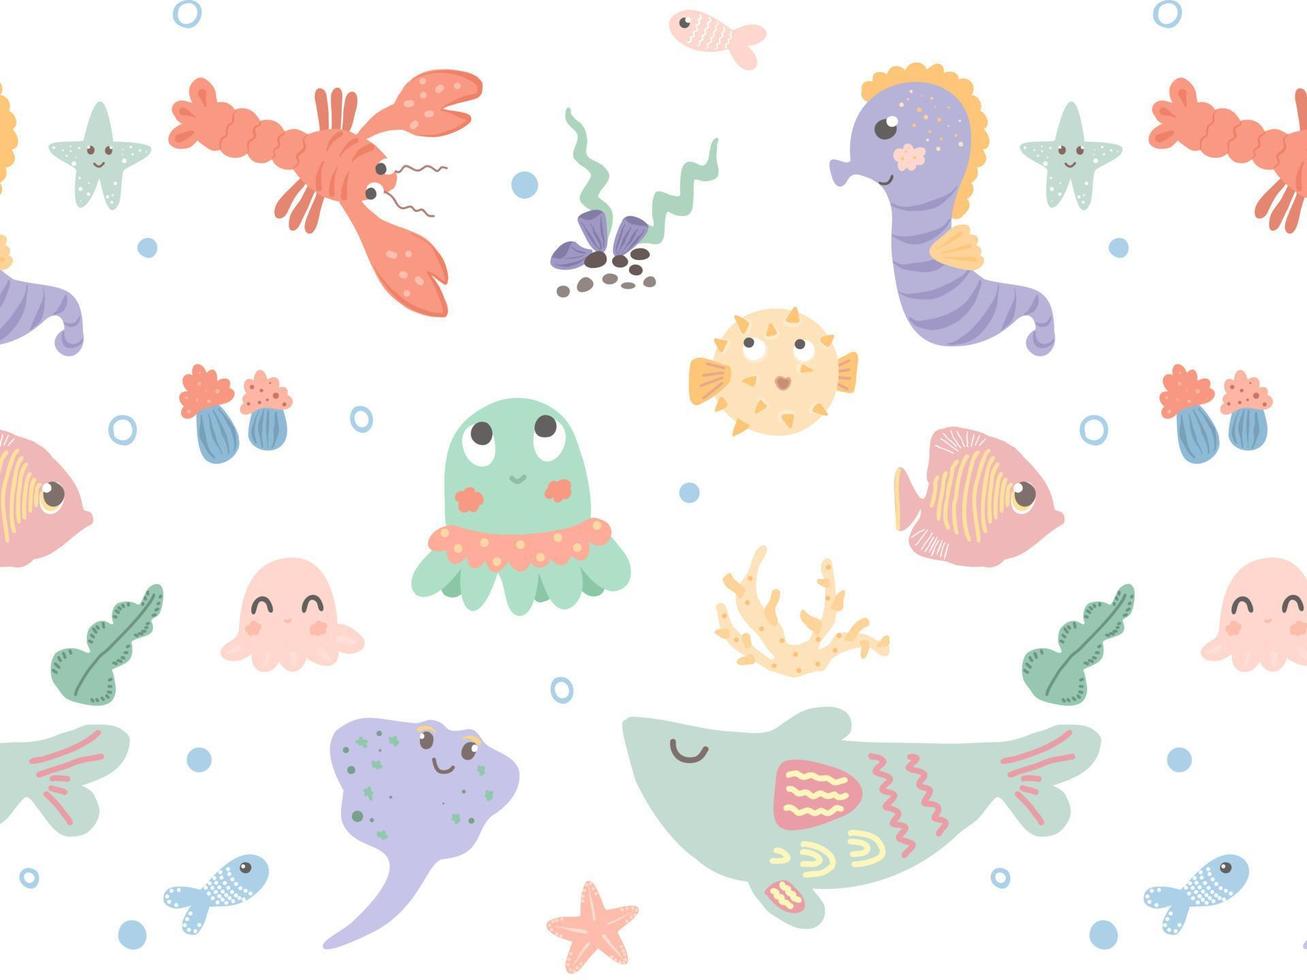 Underwater world pattern. Cartoon underwater characters. Whale, fish, starfish, octopus. Hand-drawn pattern for children's textiles, wallpapers, fabrics. vector